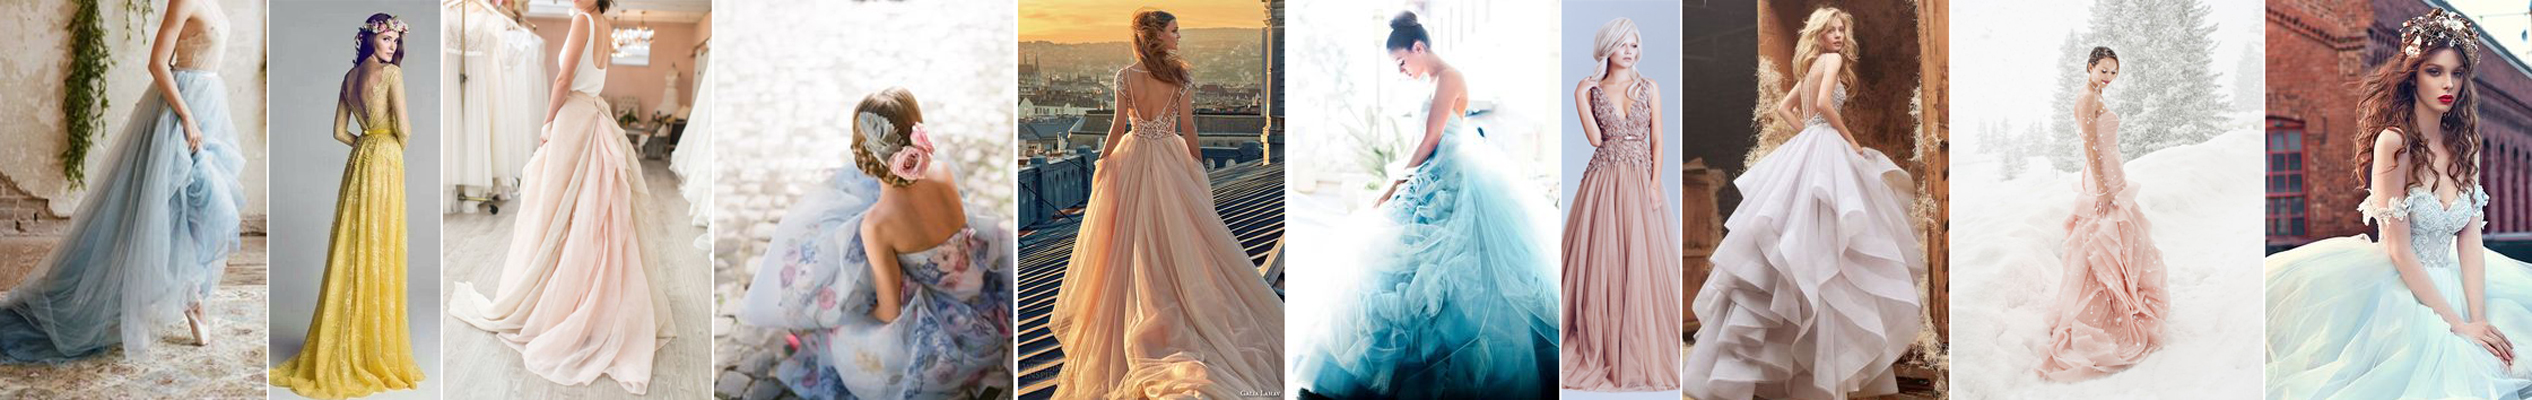 pastelowe suknie ślubne - trendy 2016